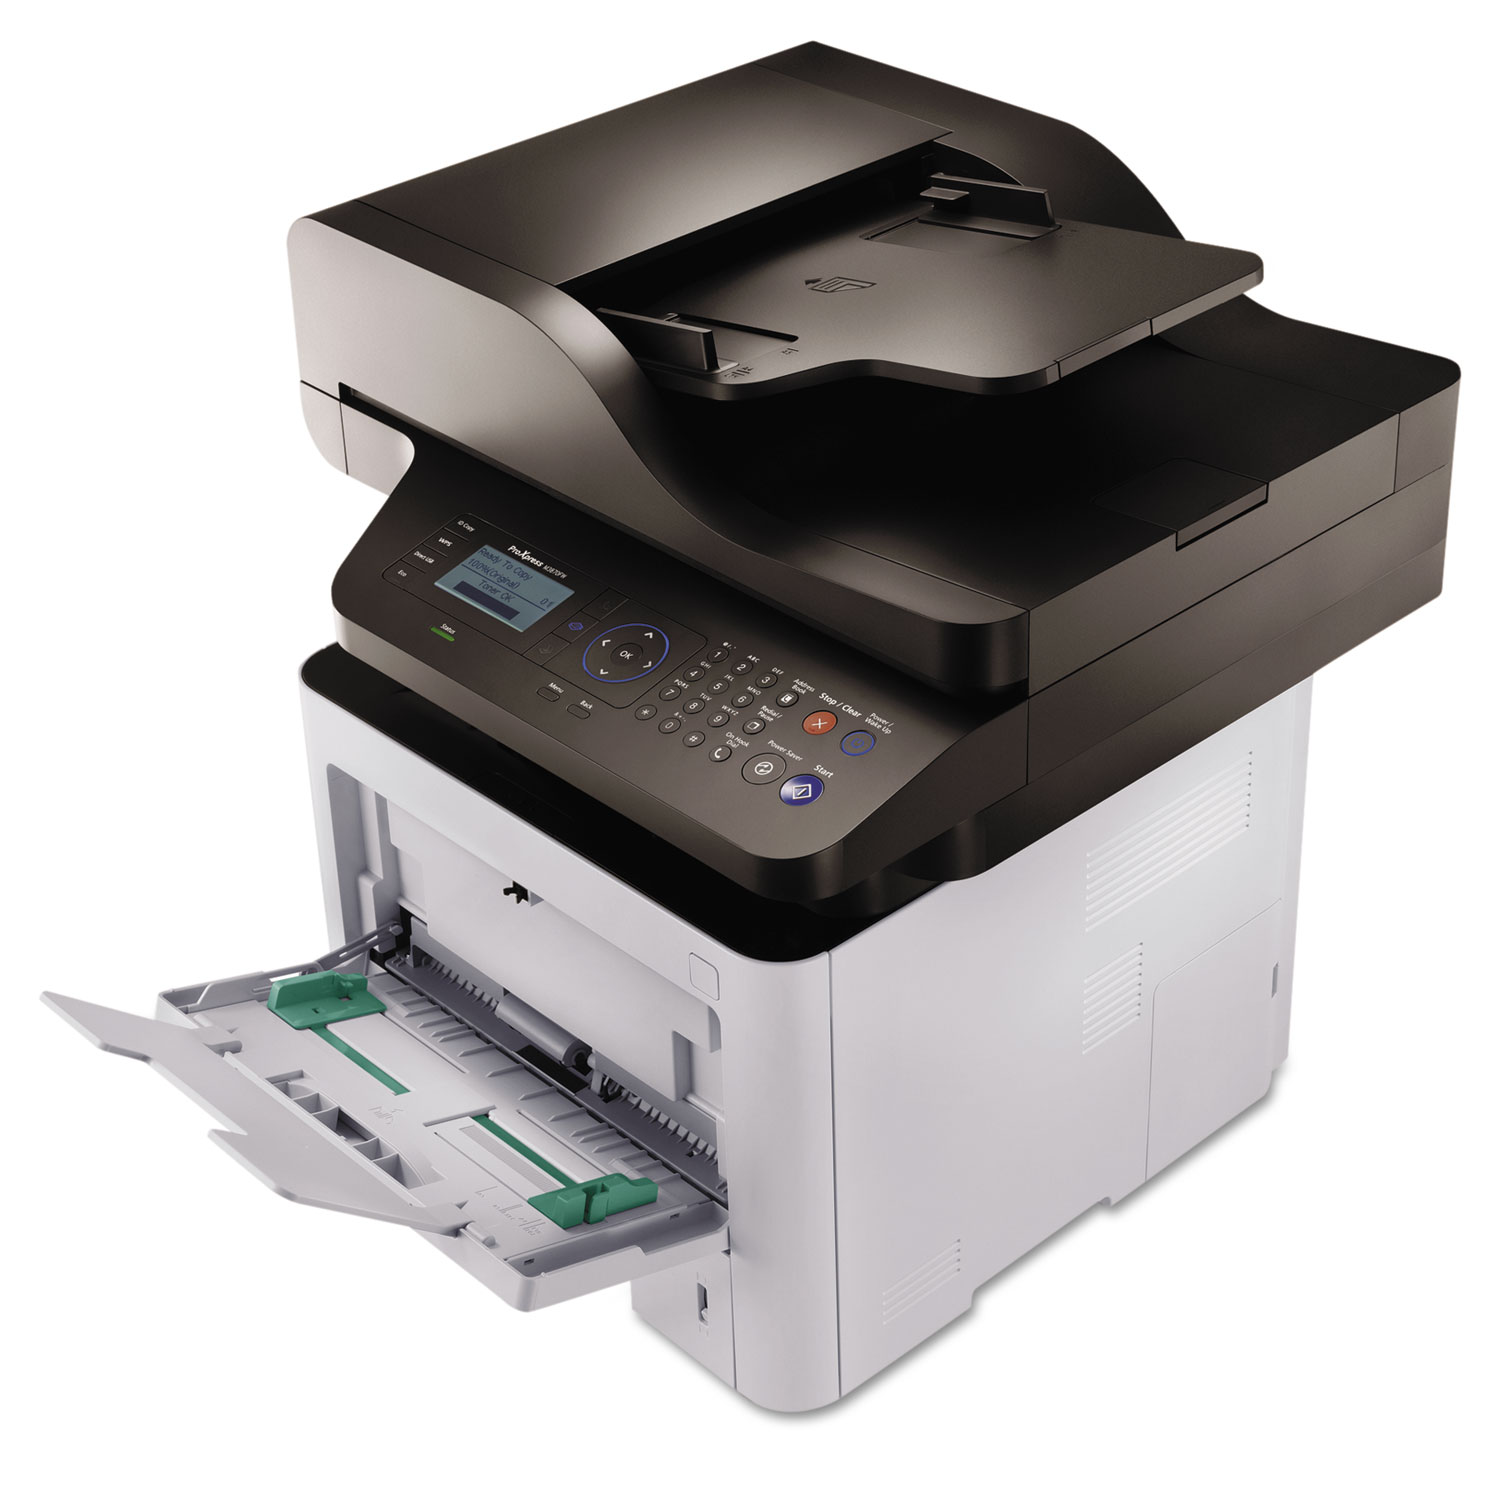 ProXpress M3870FW Wireless Multifunction Laser Printer, Copy/Fax/Print/Scan